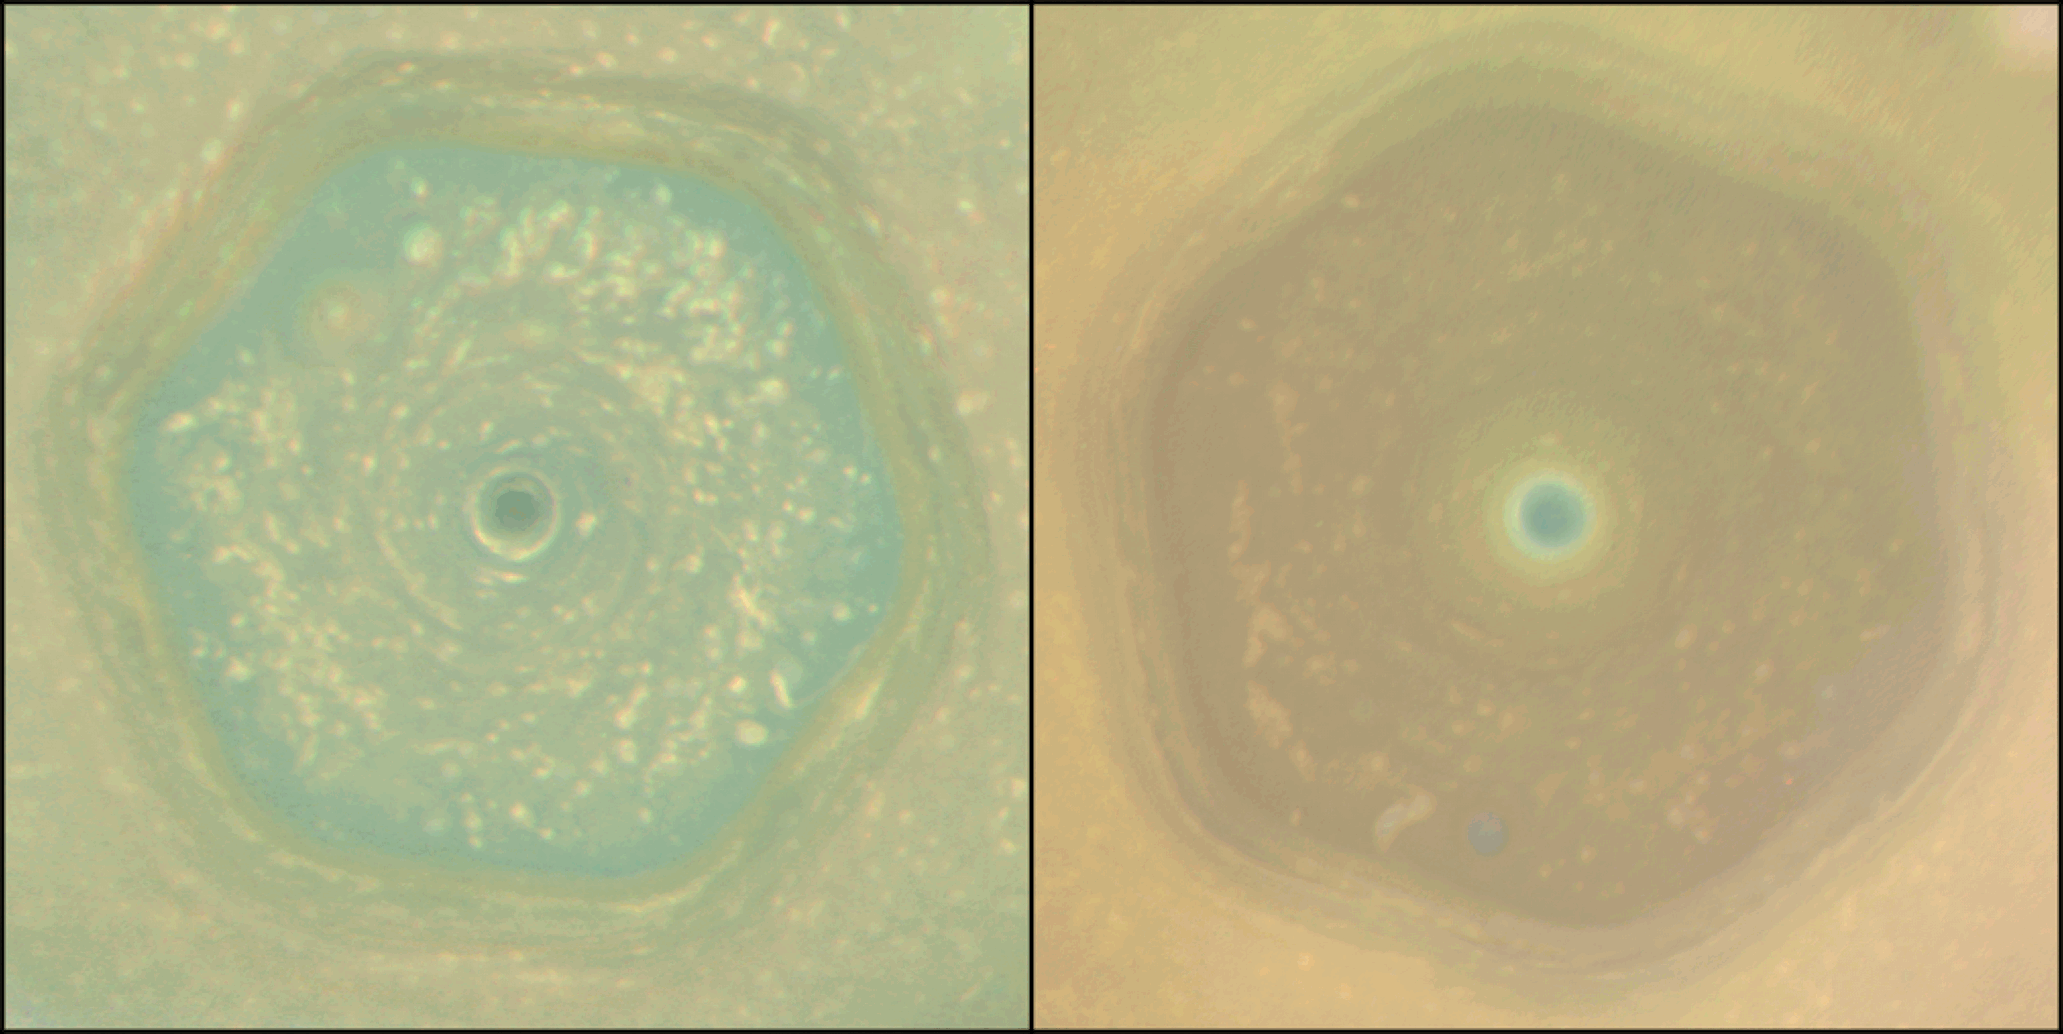 Saturn's Hexagon as Summer Solstice Approaches